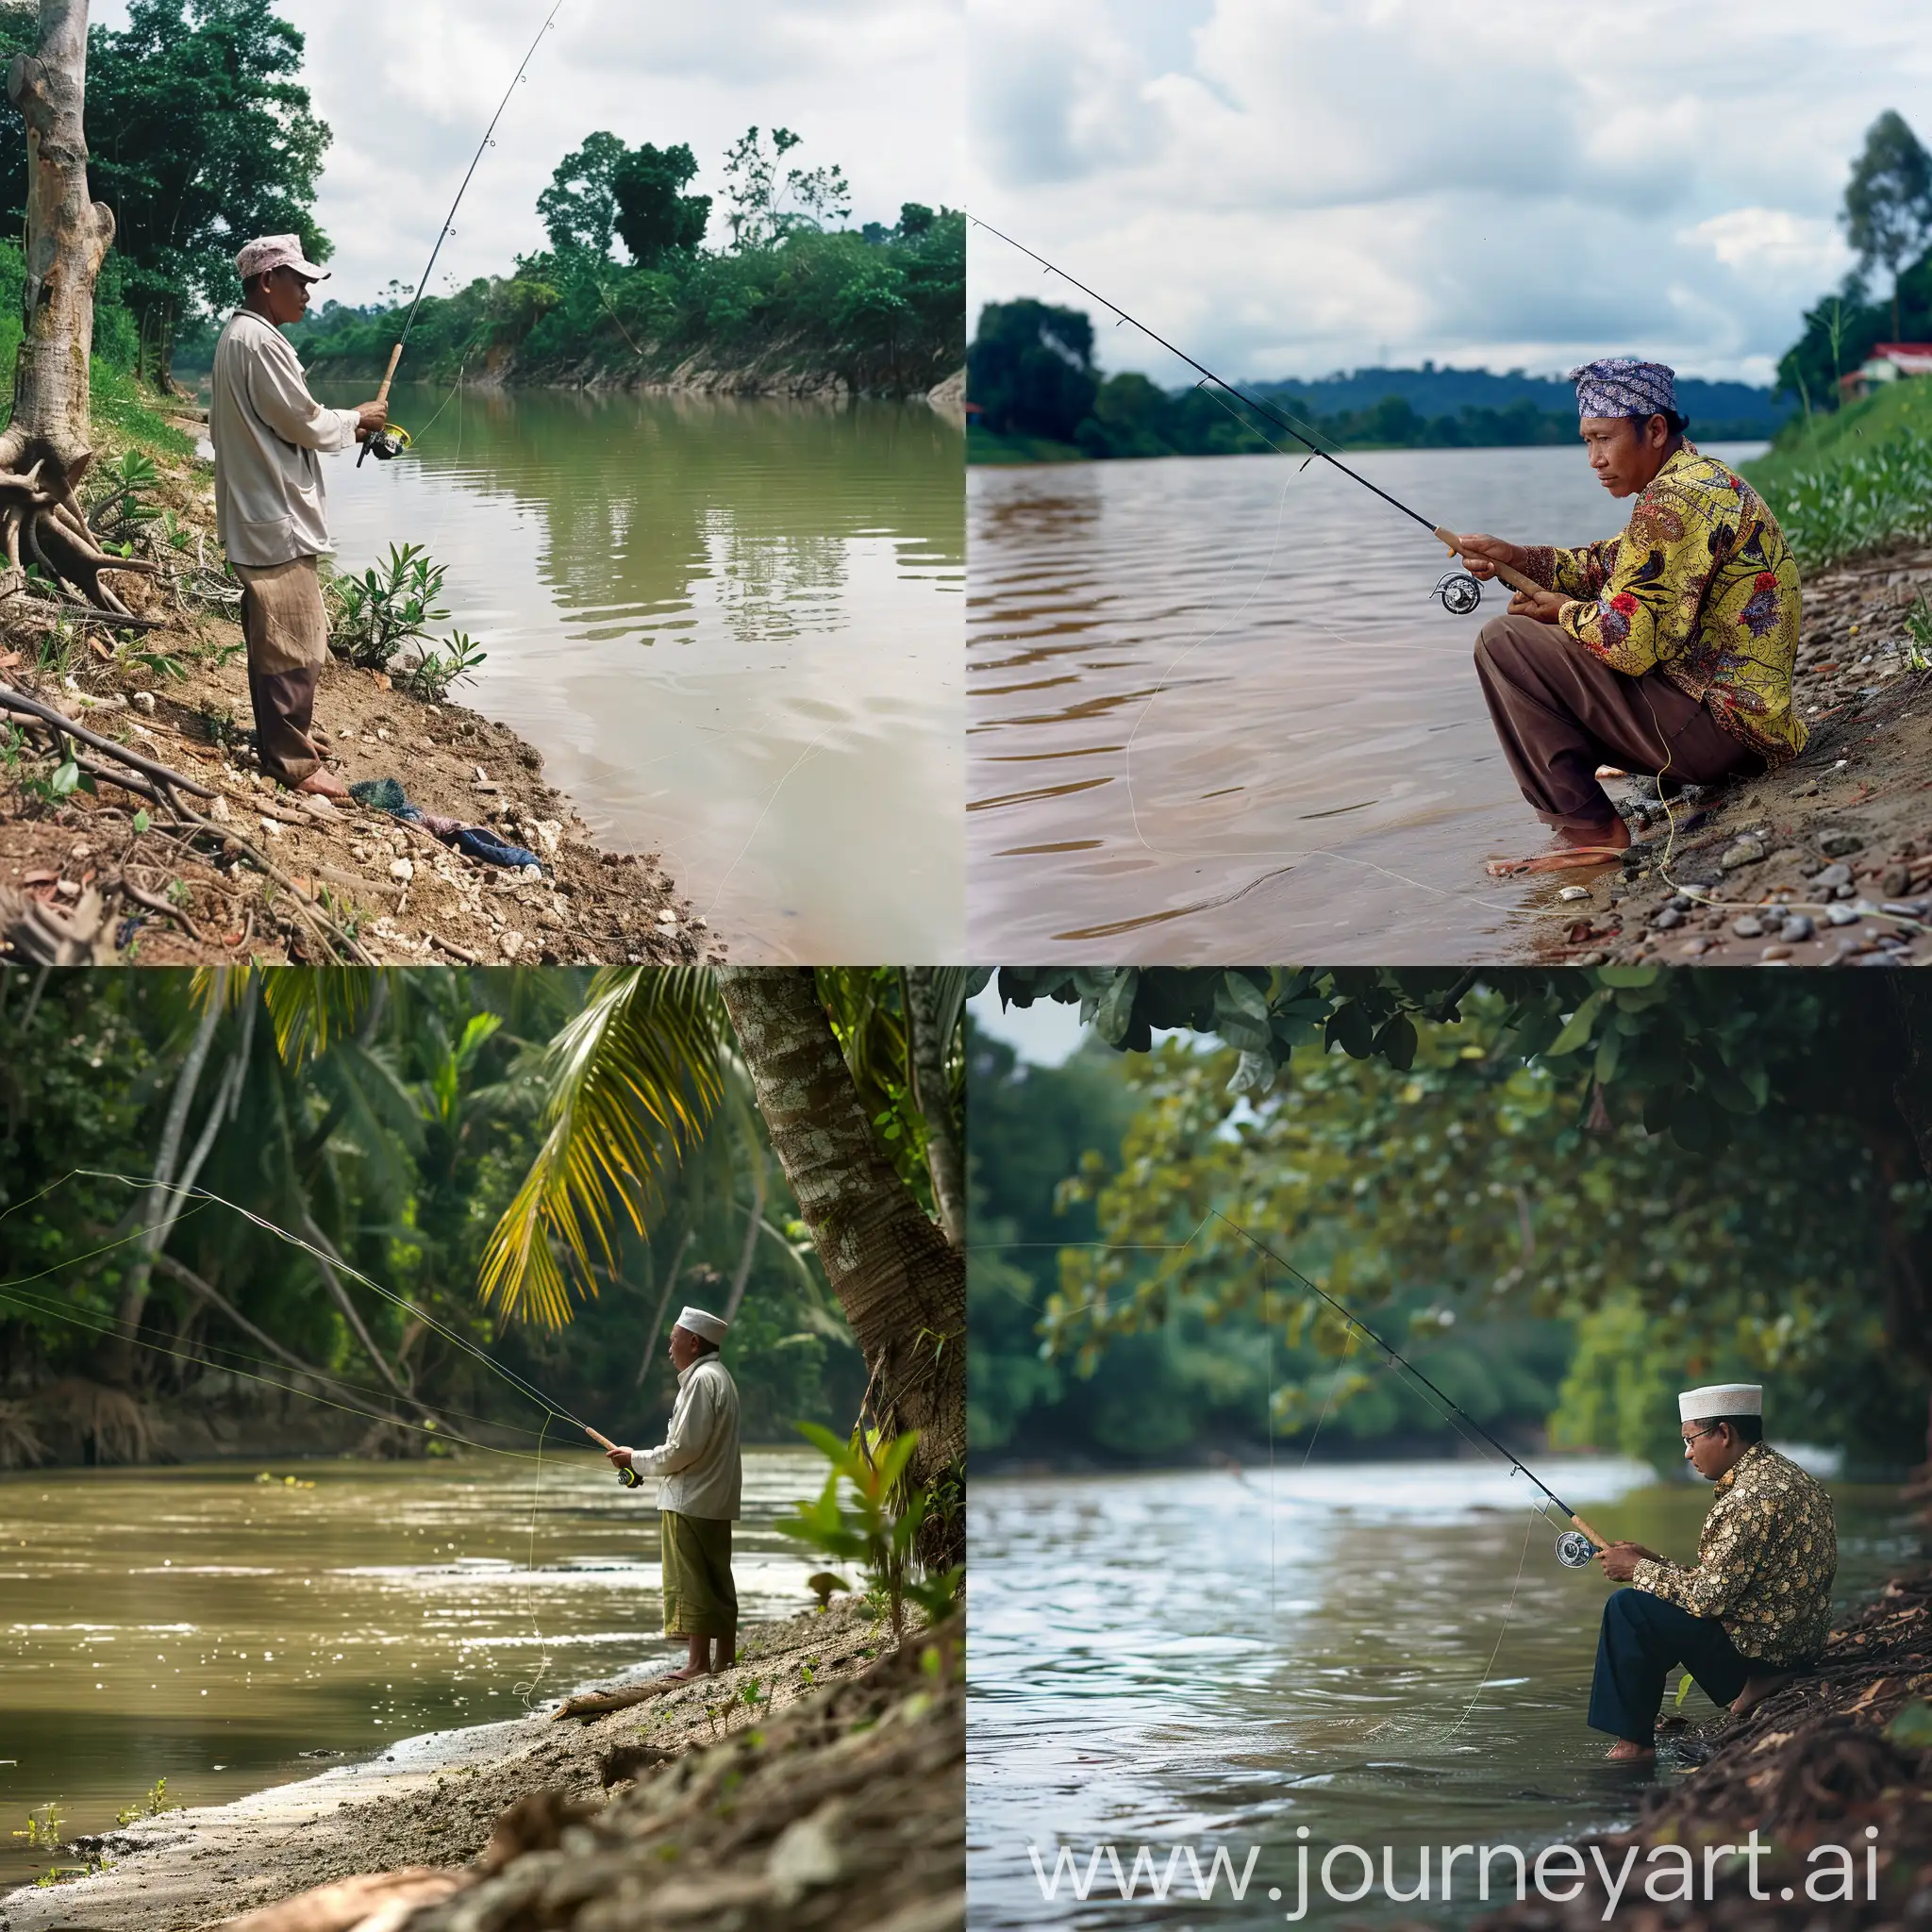 A malay man fishing on the river bank